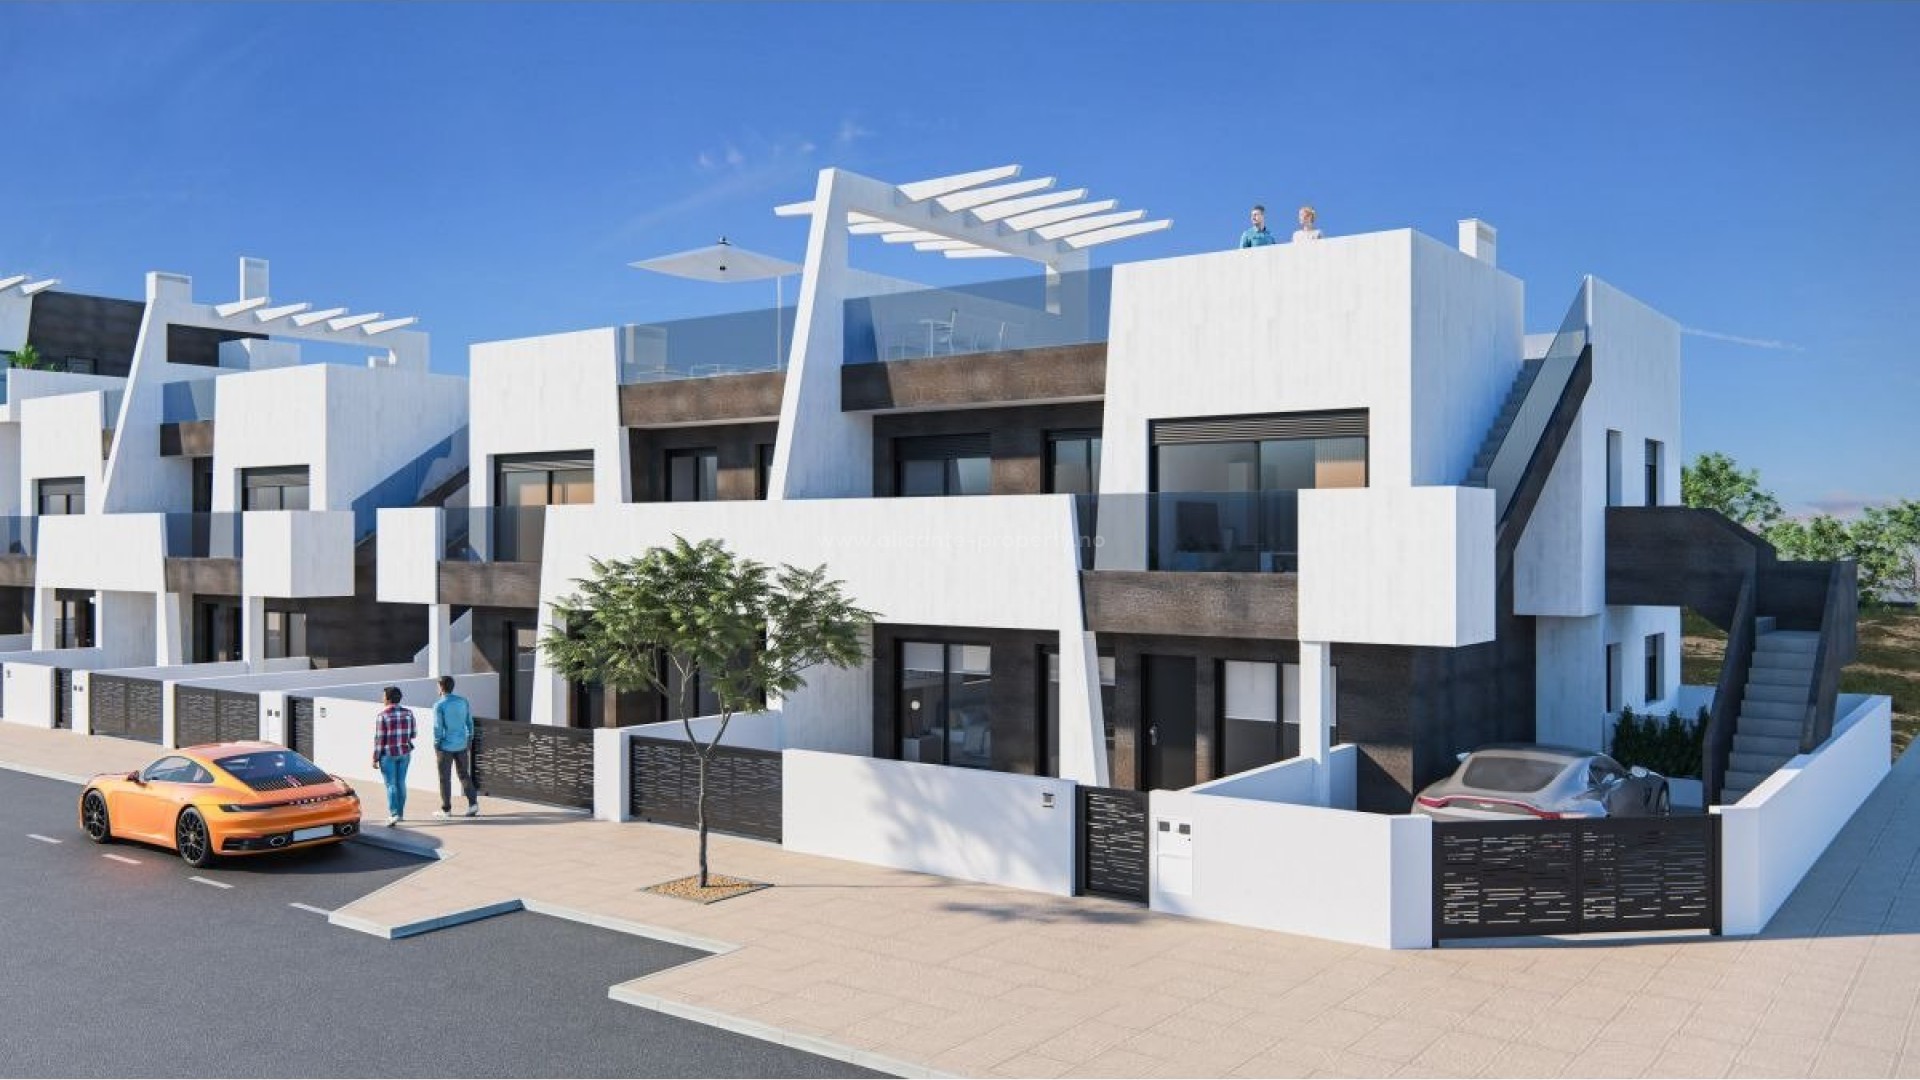 8 bungalows - apartments in Pilar de La Horadada, rooftop pool, 2/3 bedrooms, 2 bathrooms, large garden or solarium, close to beautiful beaches